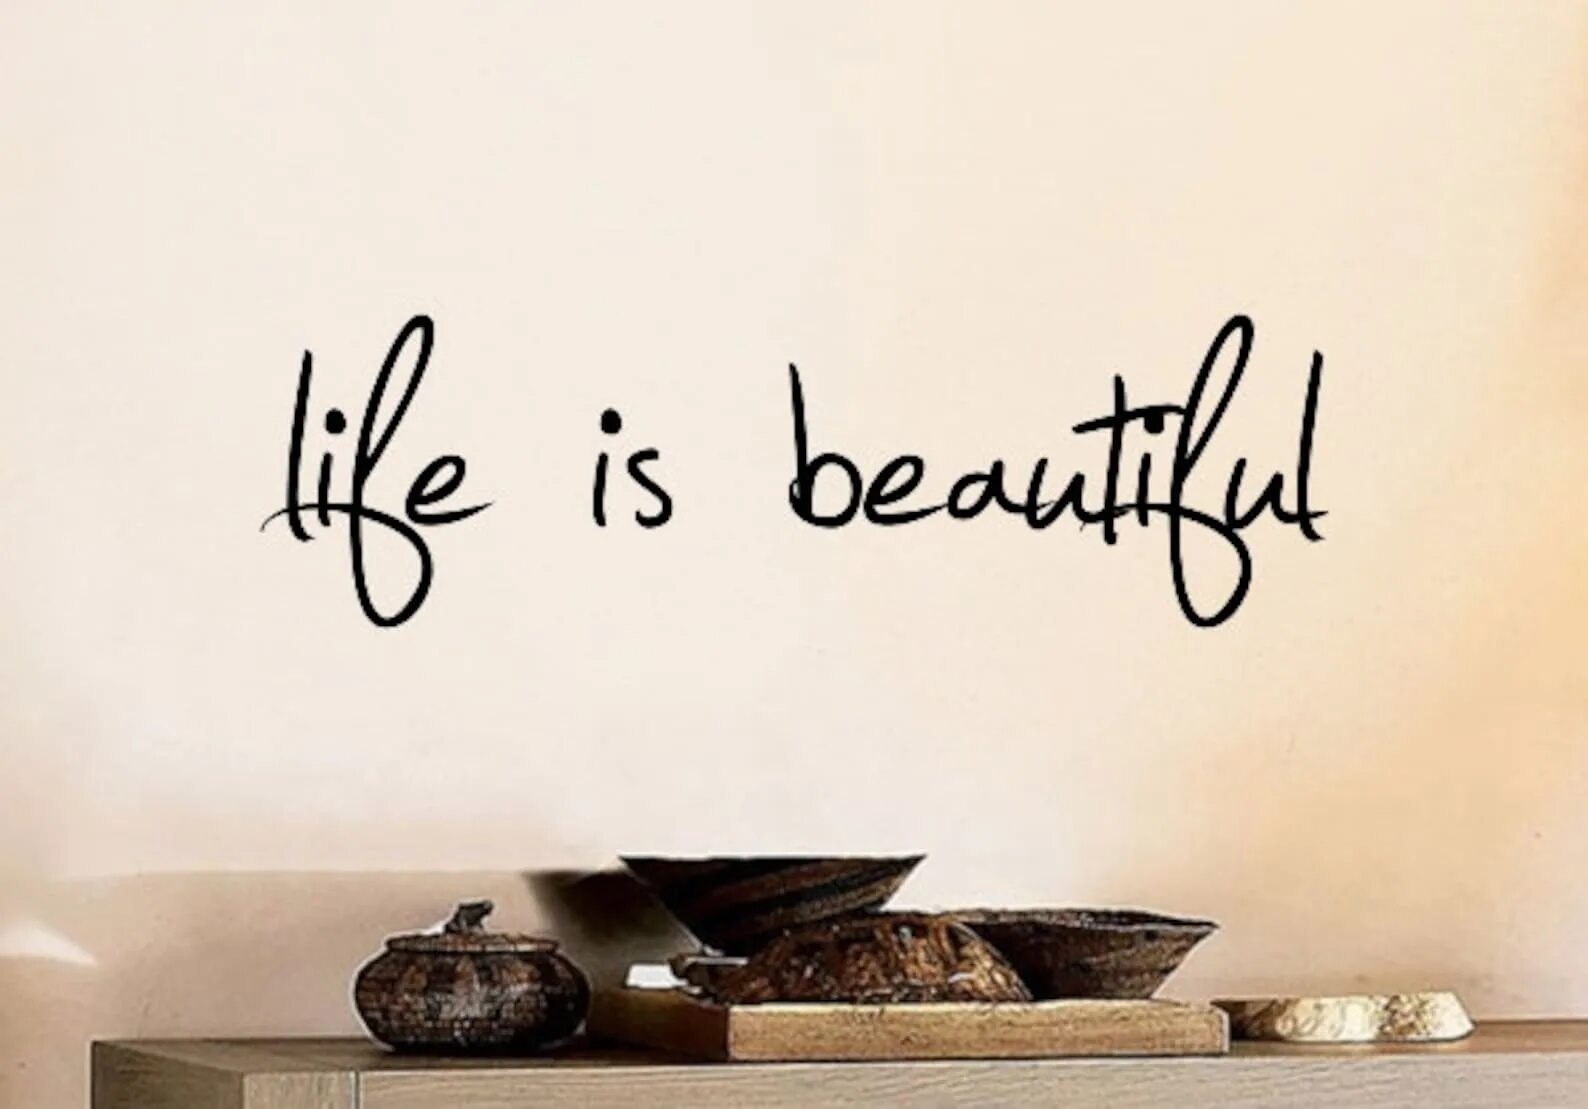 Life is style. Life надпись. Жизнь прекрасна надпись. Life is beautiful надпись. Life is beautiful красивая надпись.